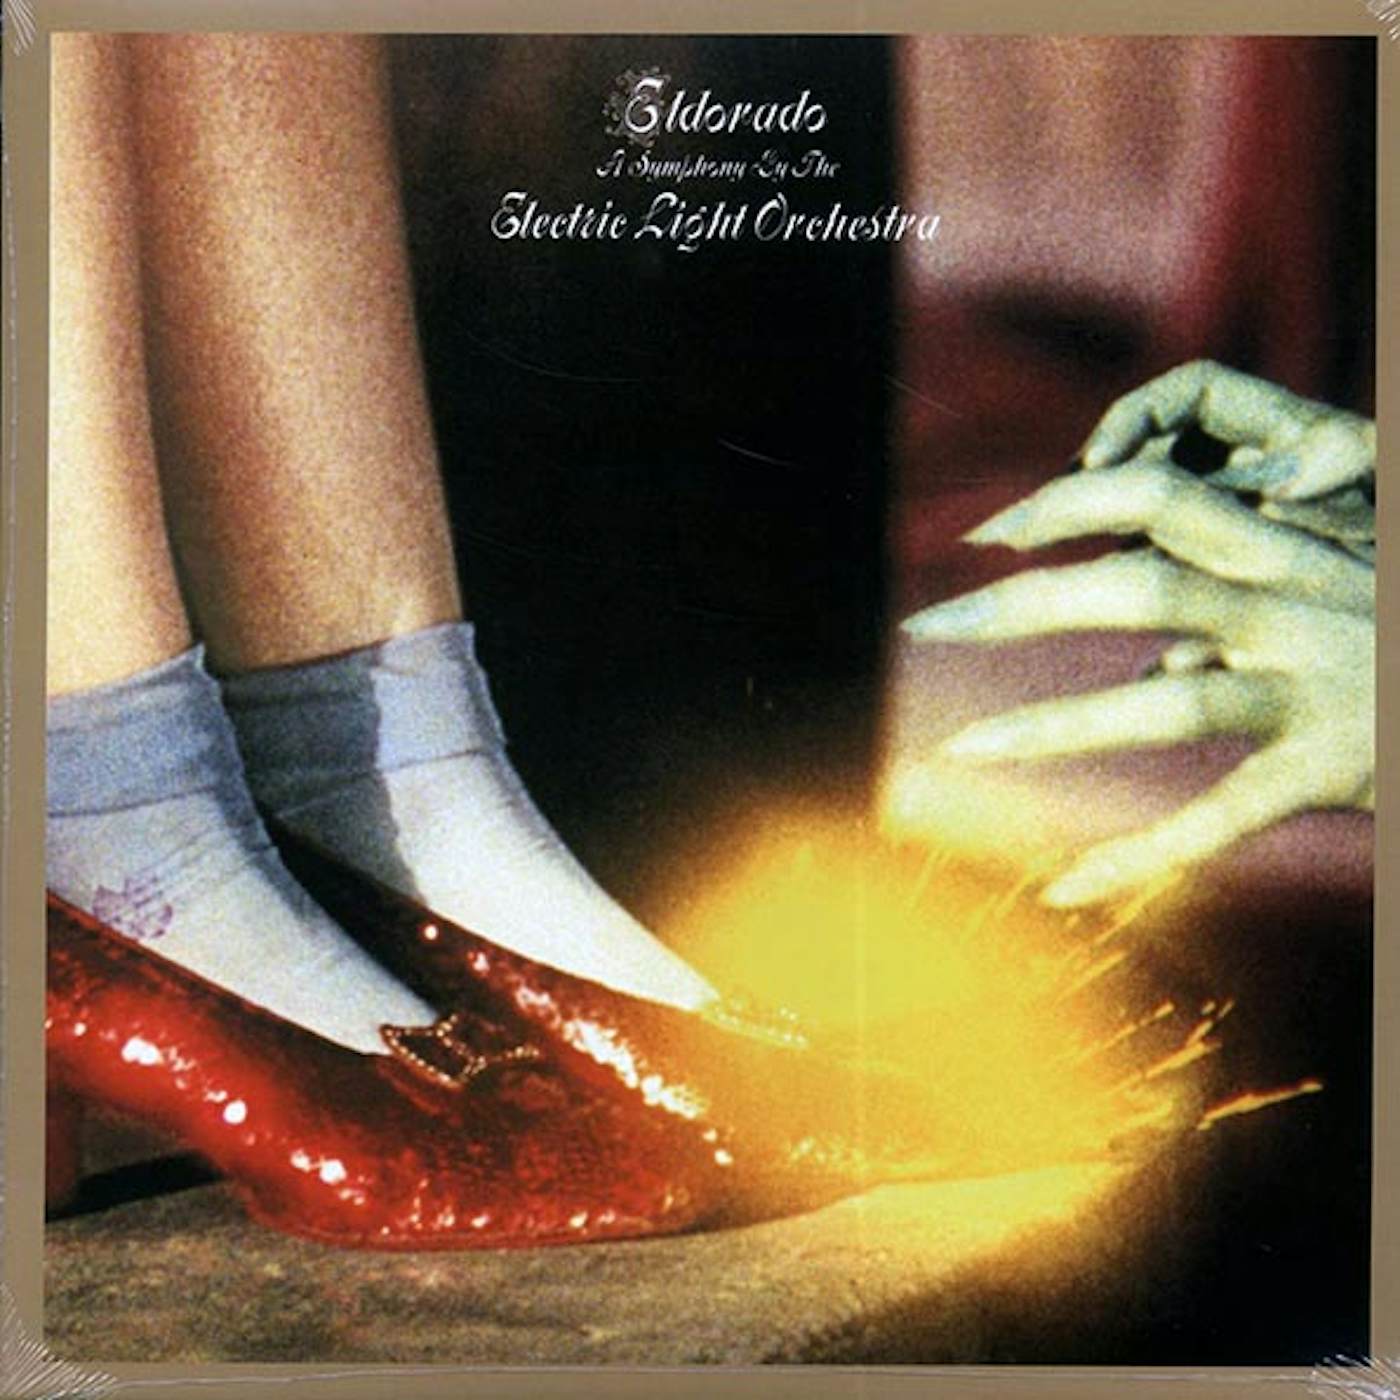 Electric Light Orchestra  LP - Eldorado: A Symphony By ELO (Electric Light Orchestra) (Vinyl)